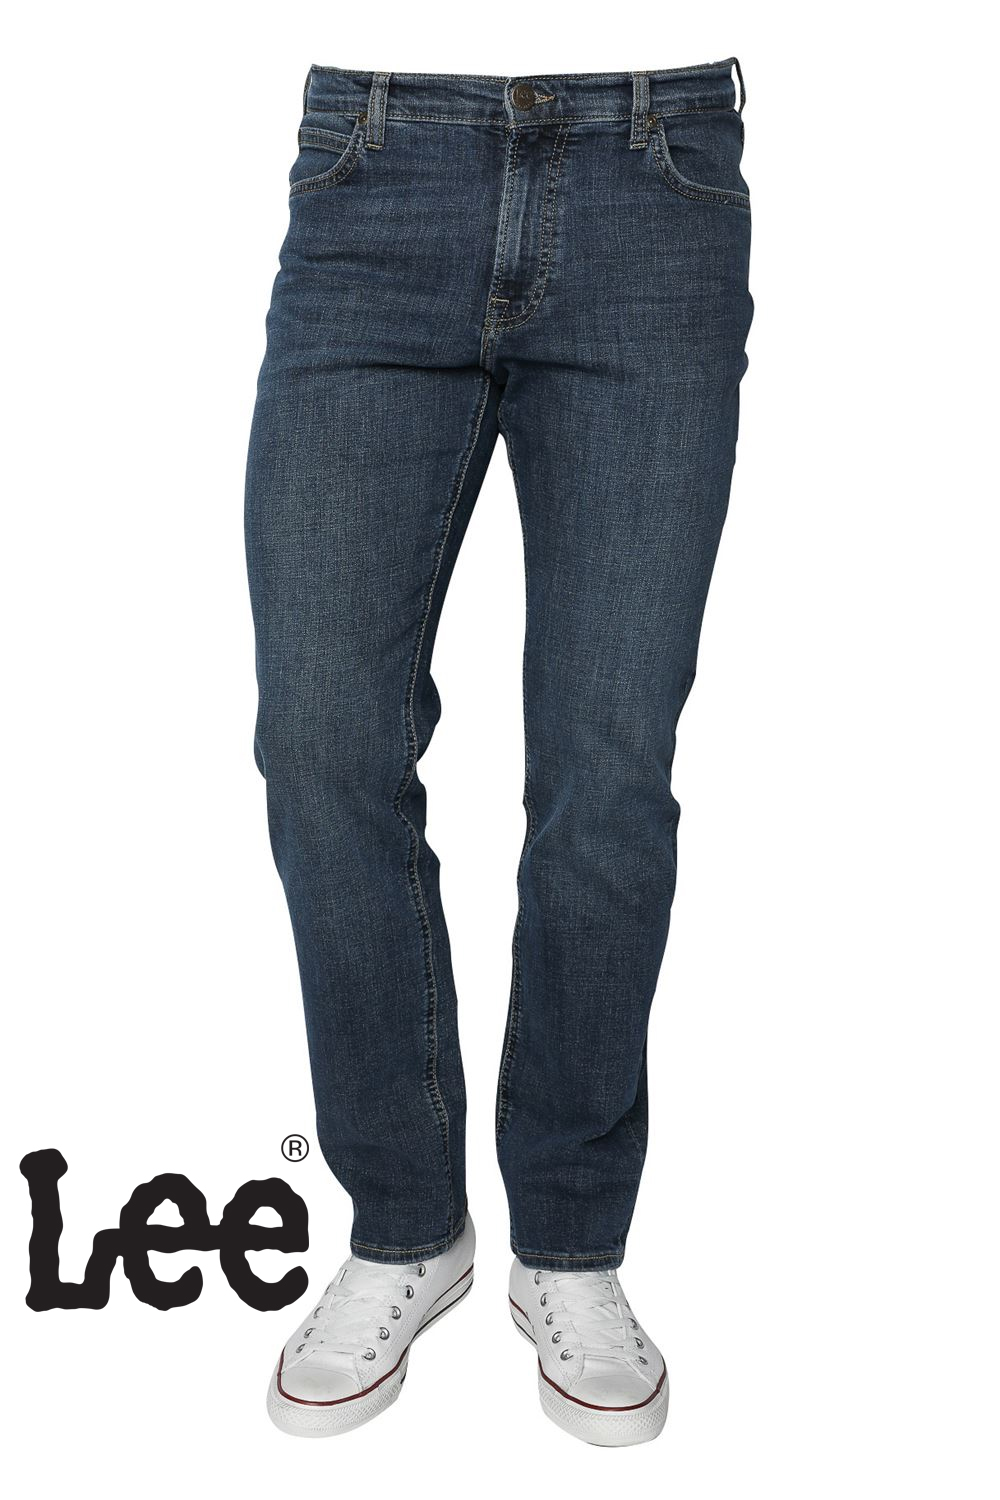 West Lee jeans